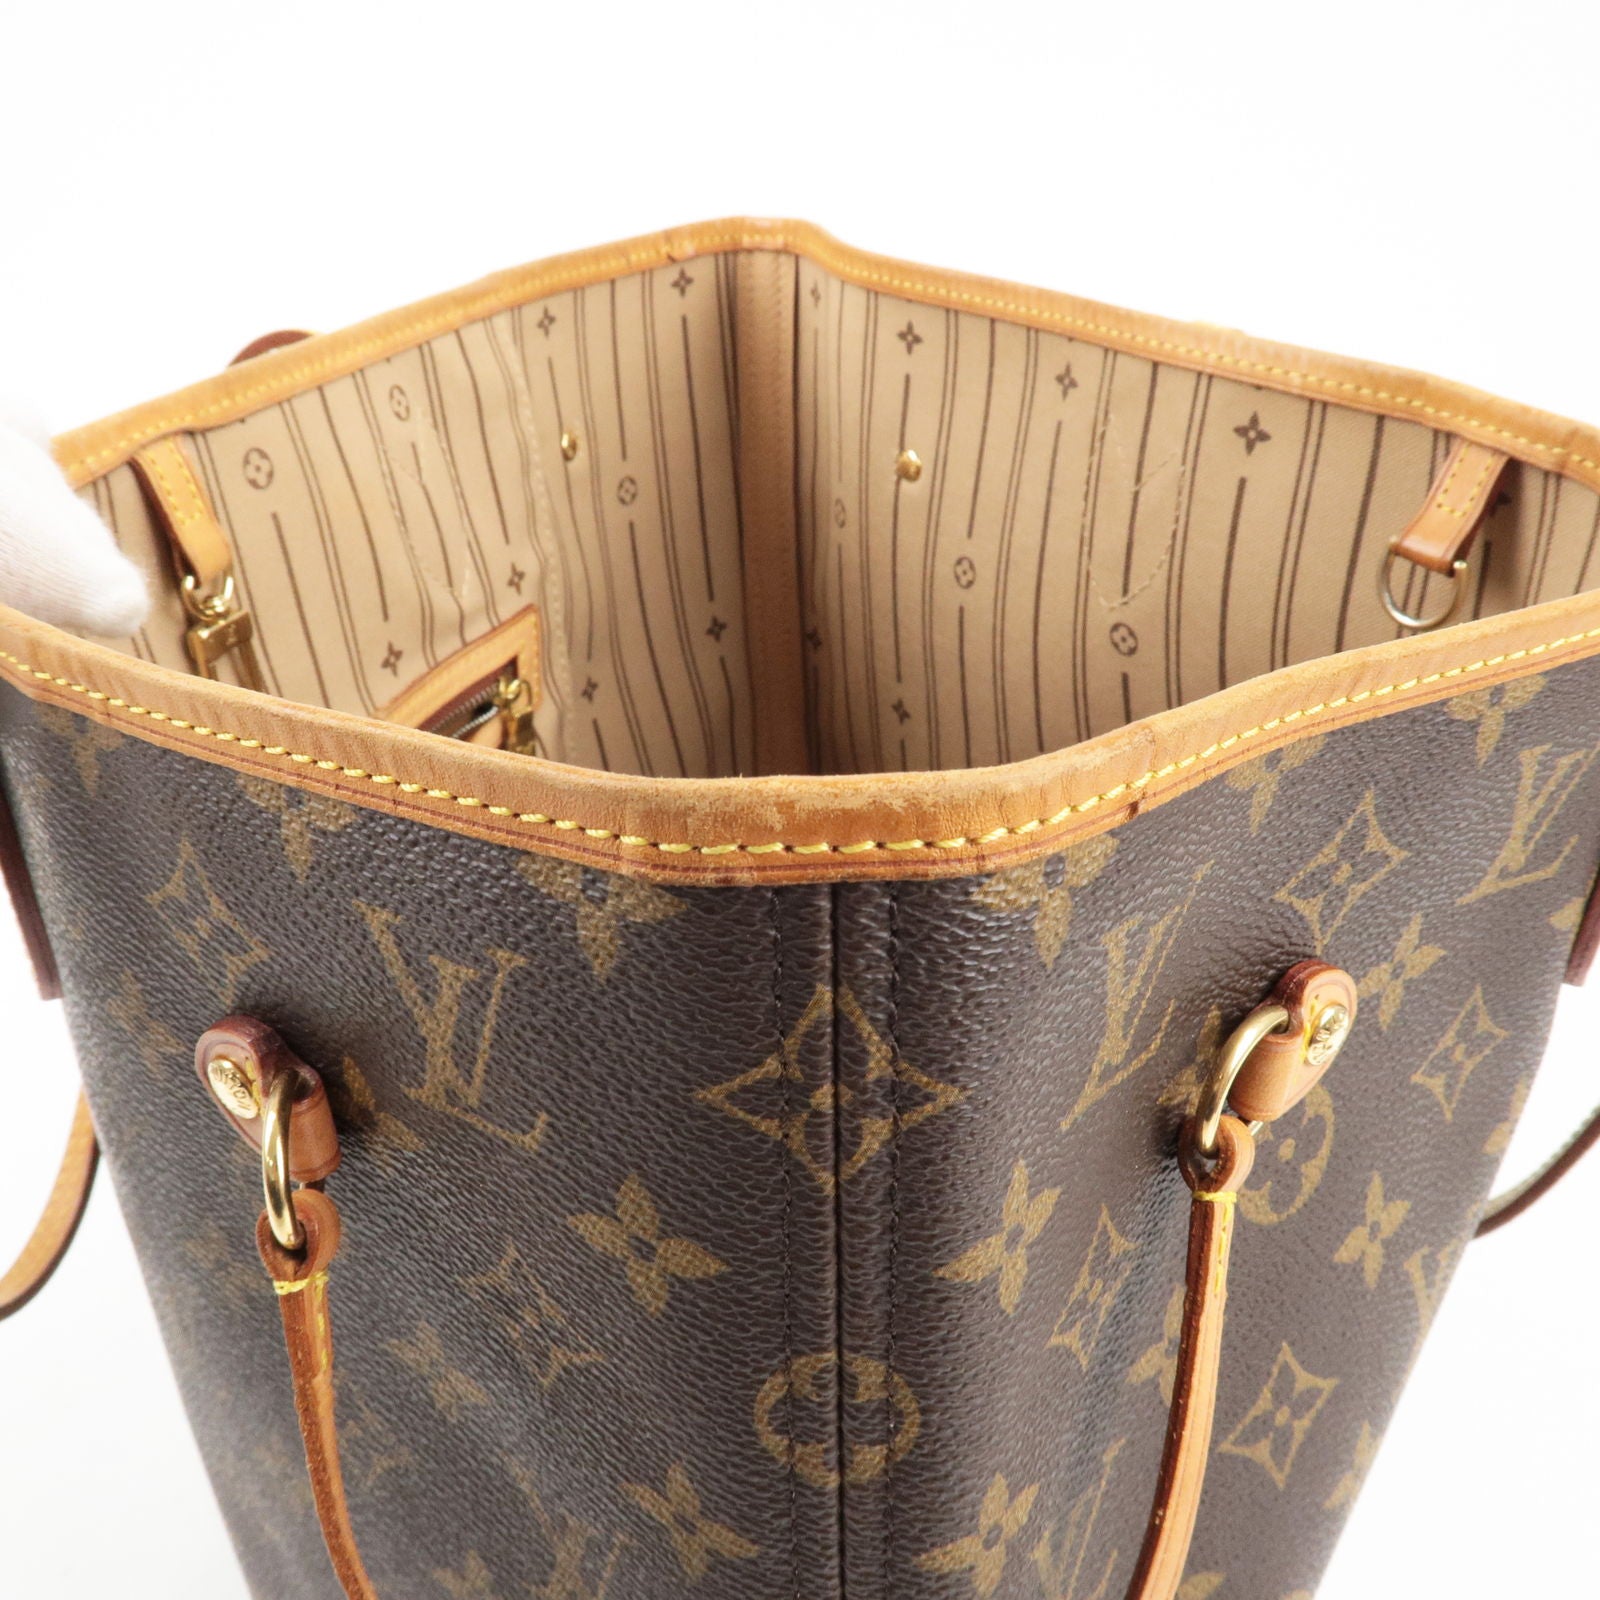 Louis-Vuitton-Monogram-Neverfull-MM-Tote-Bag-Brown-M40156-F/S